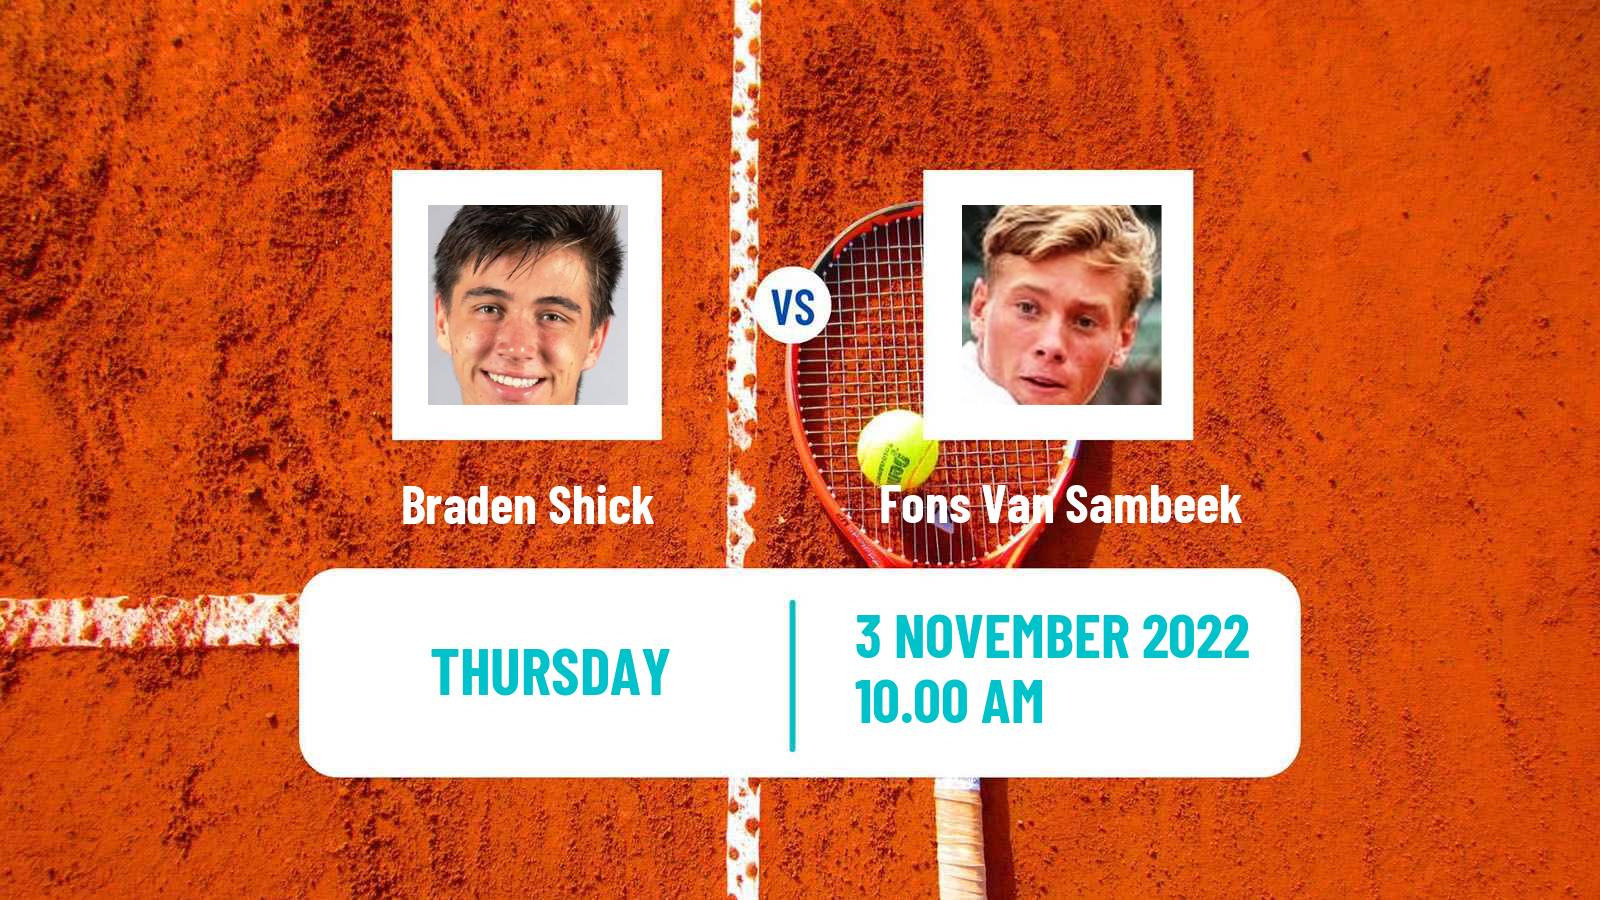 Tennis ITF Tournaments Braden Shick - Fons Van Sambeek